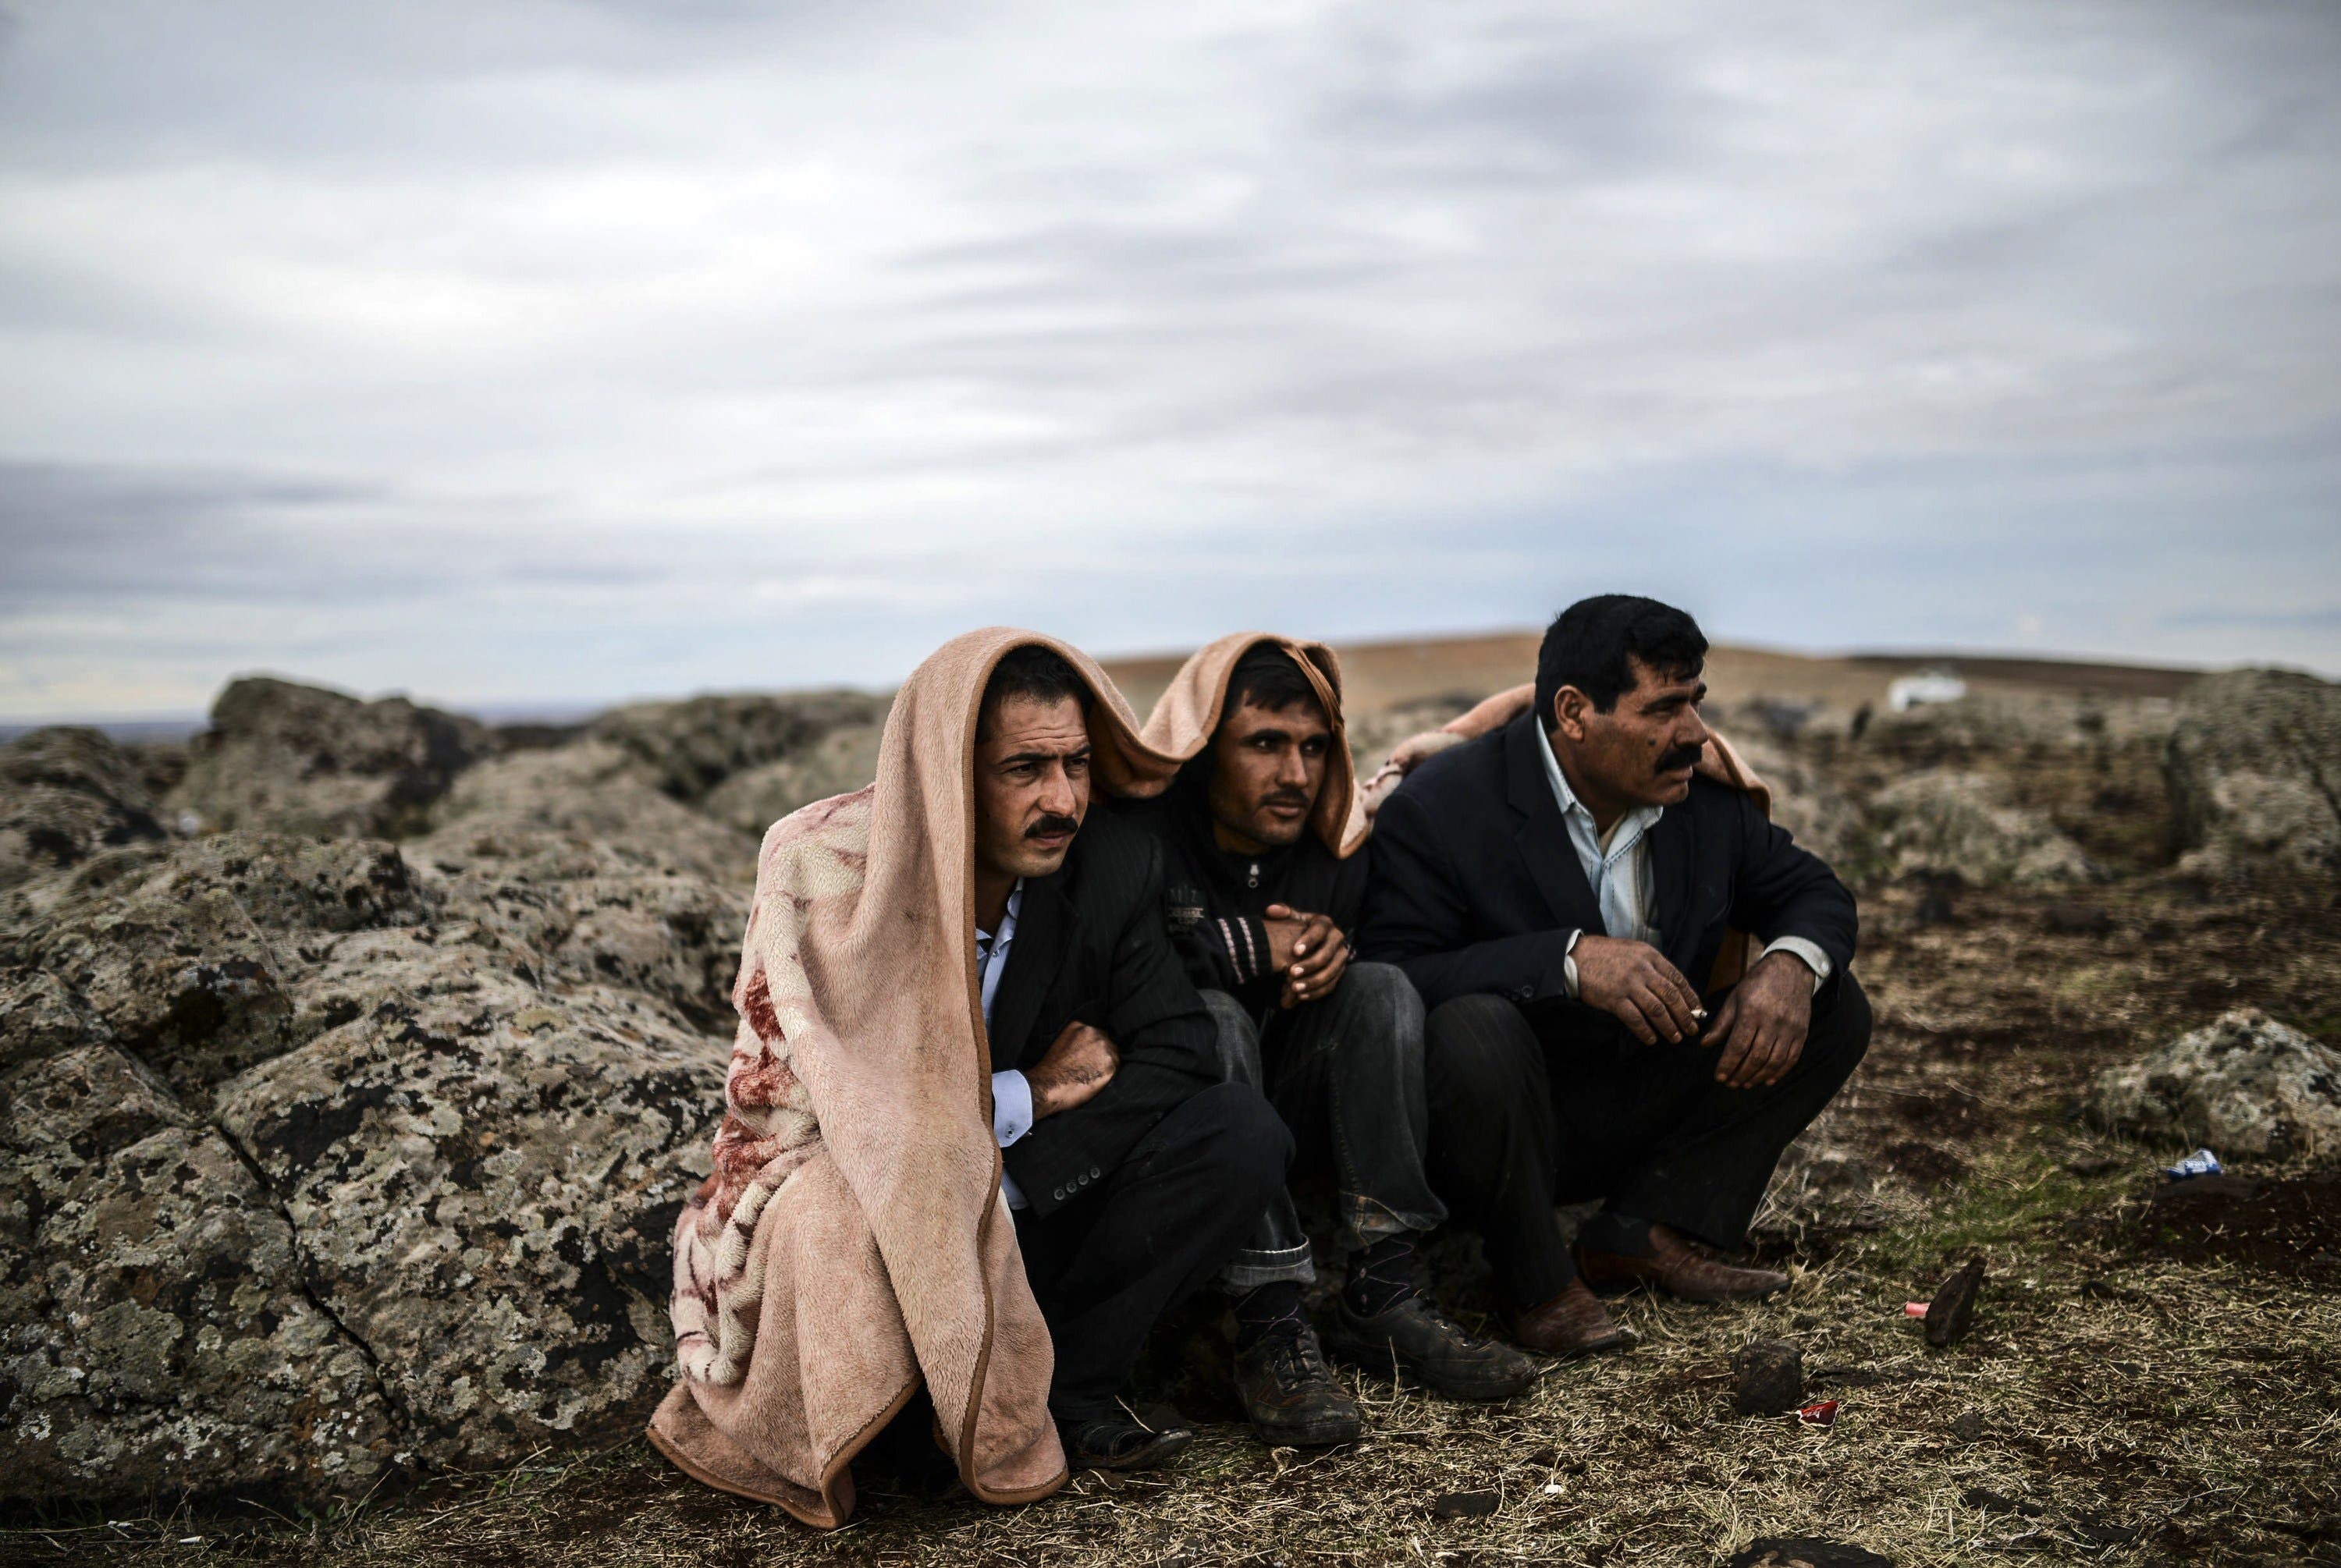 The plight of Kobane's displaced